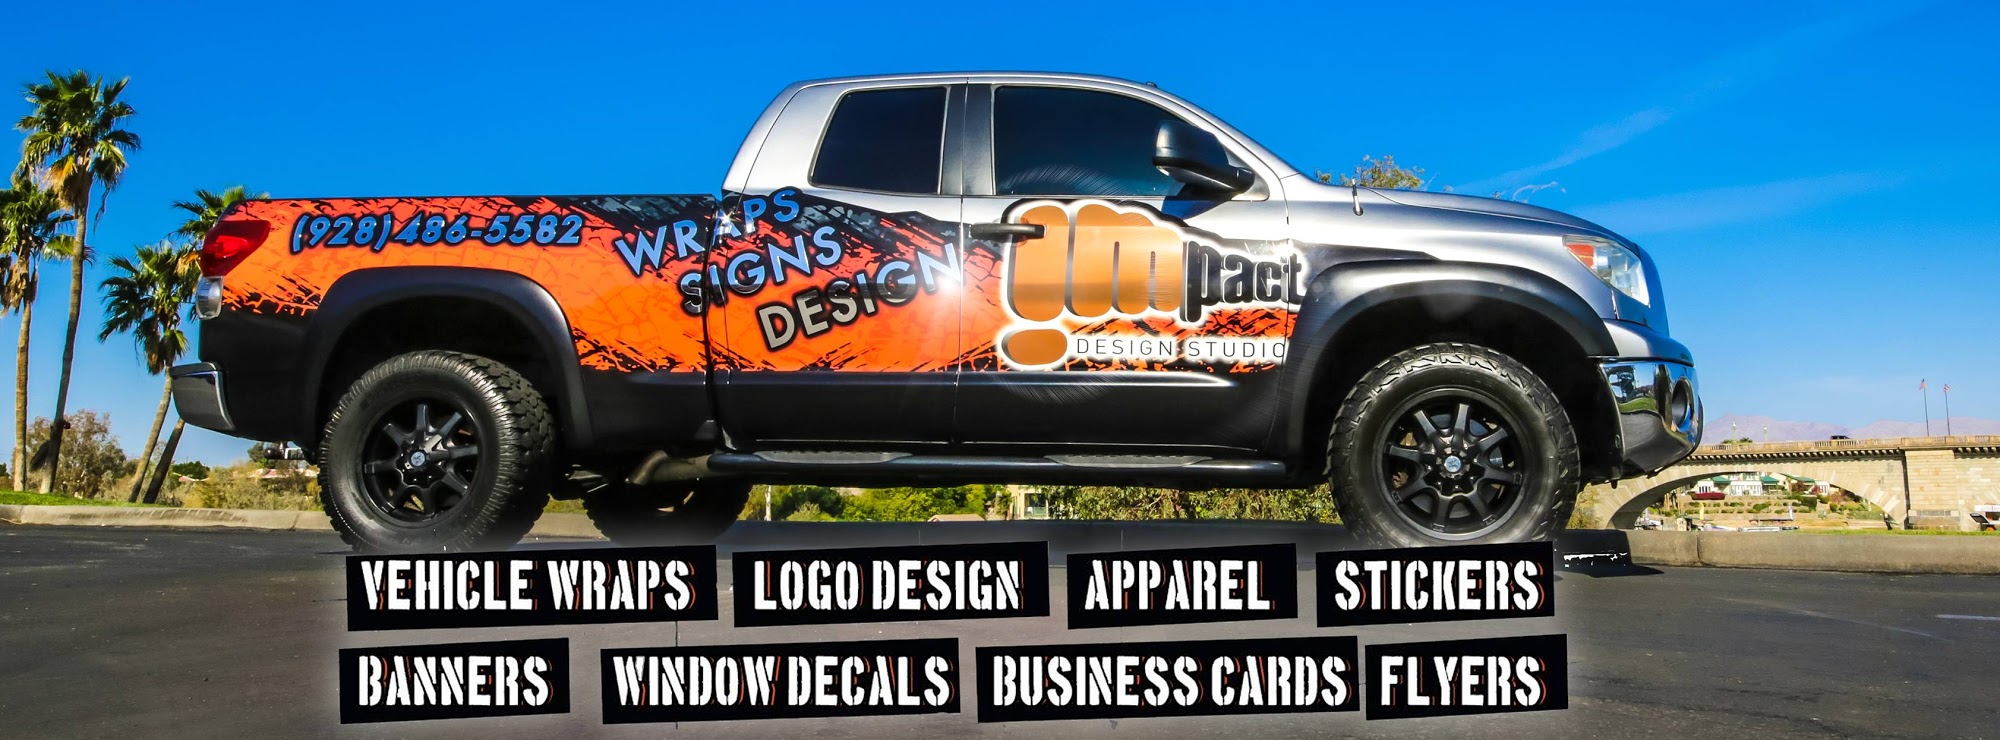 IMPACT Design Studio - Vehicle Wraps, Signs, Graphic Design, Business Cards